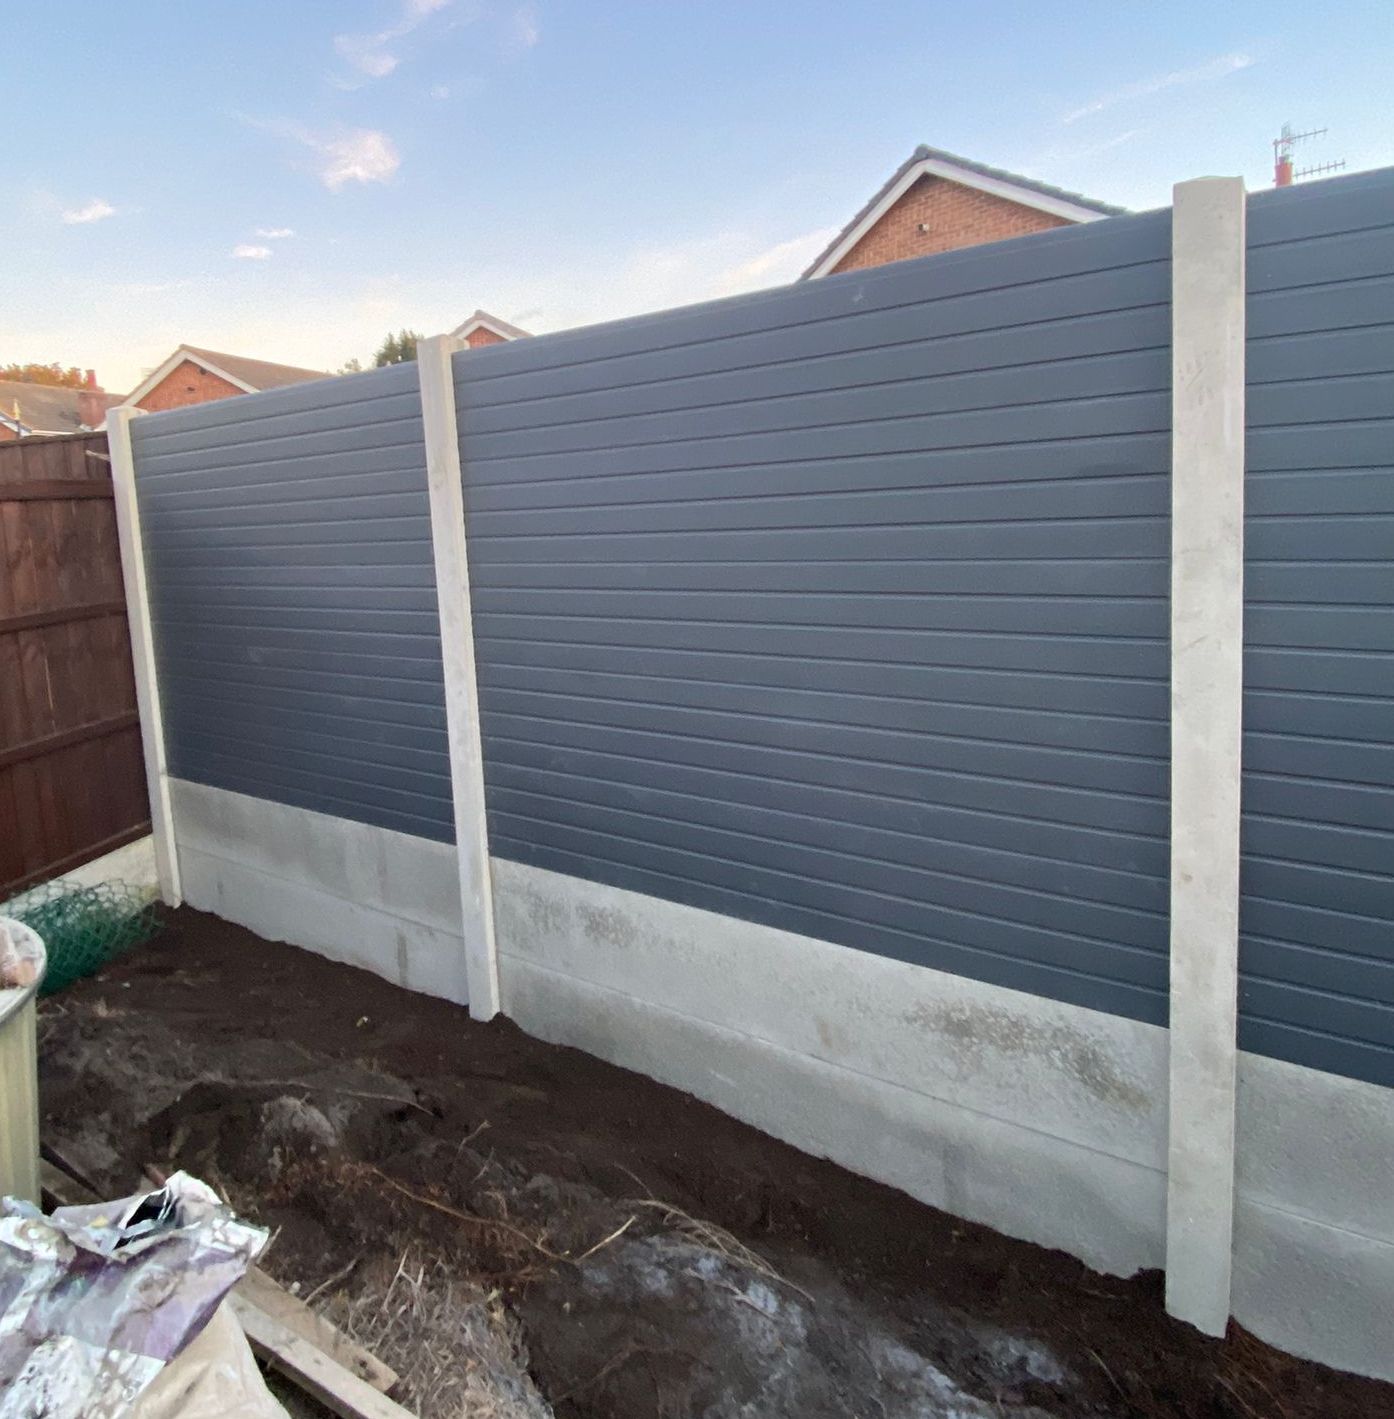 Nottingham Fencing grey composite fencing installed between concrete posts